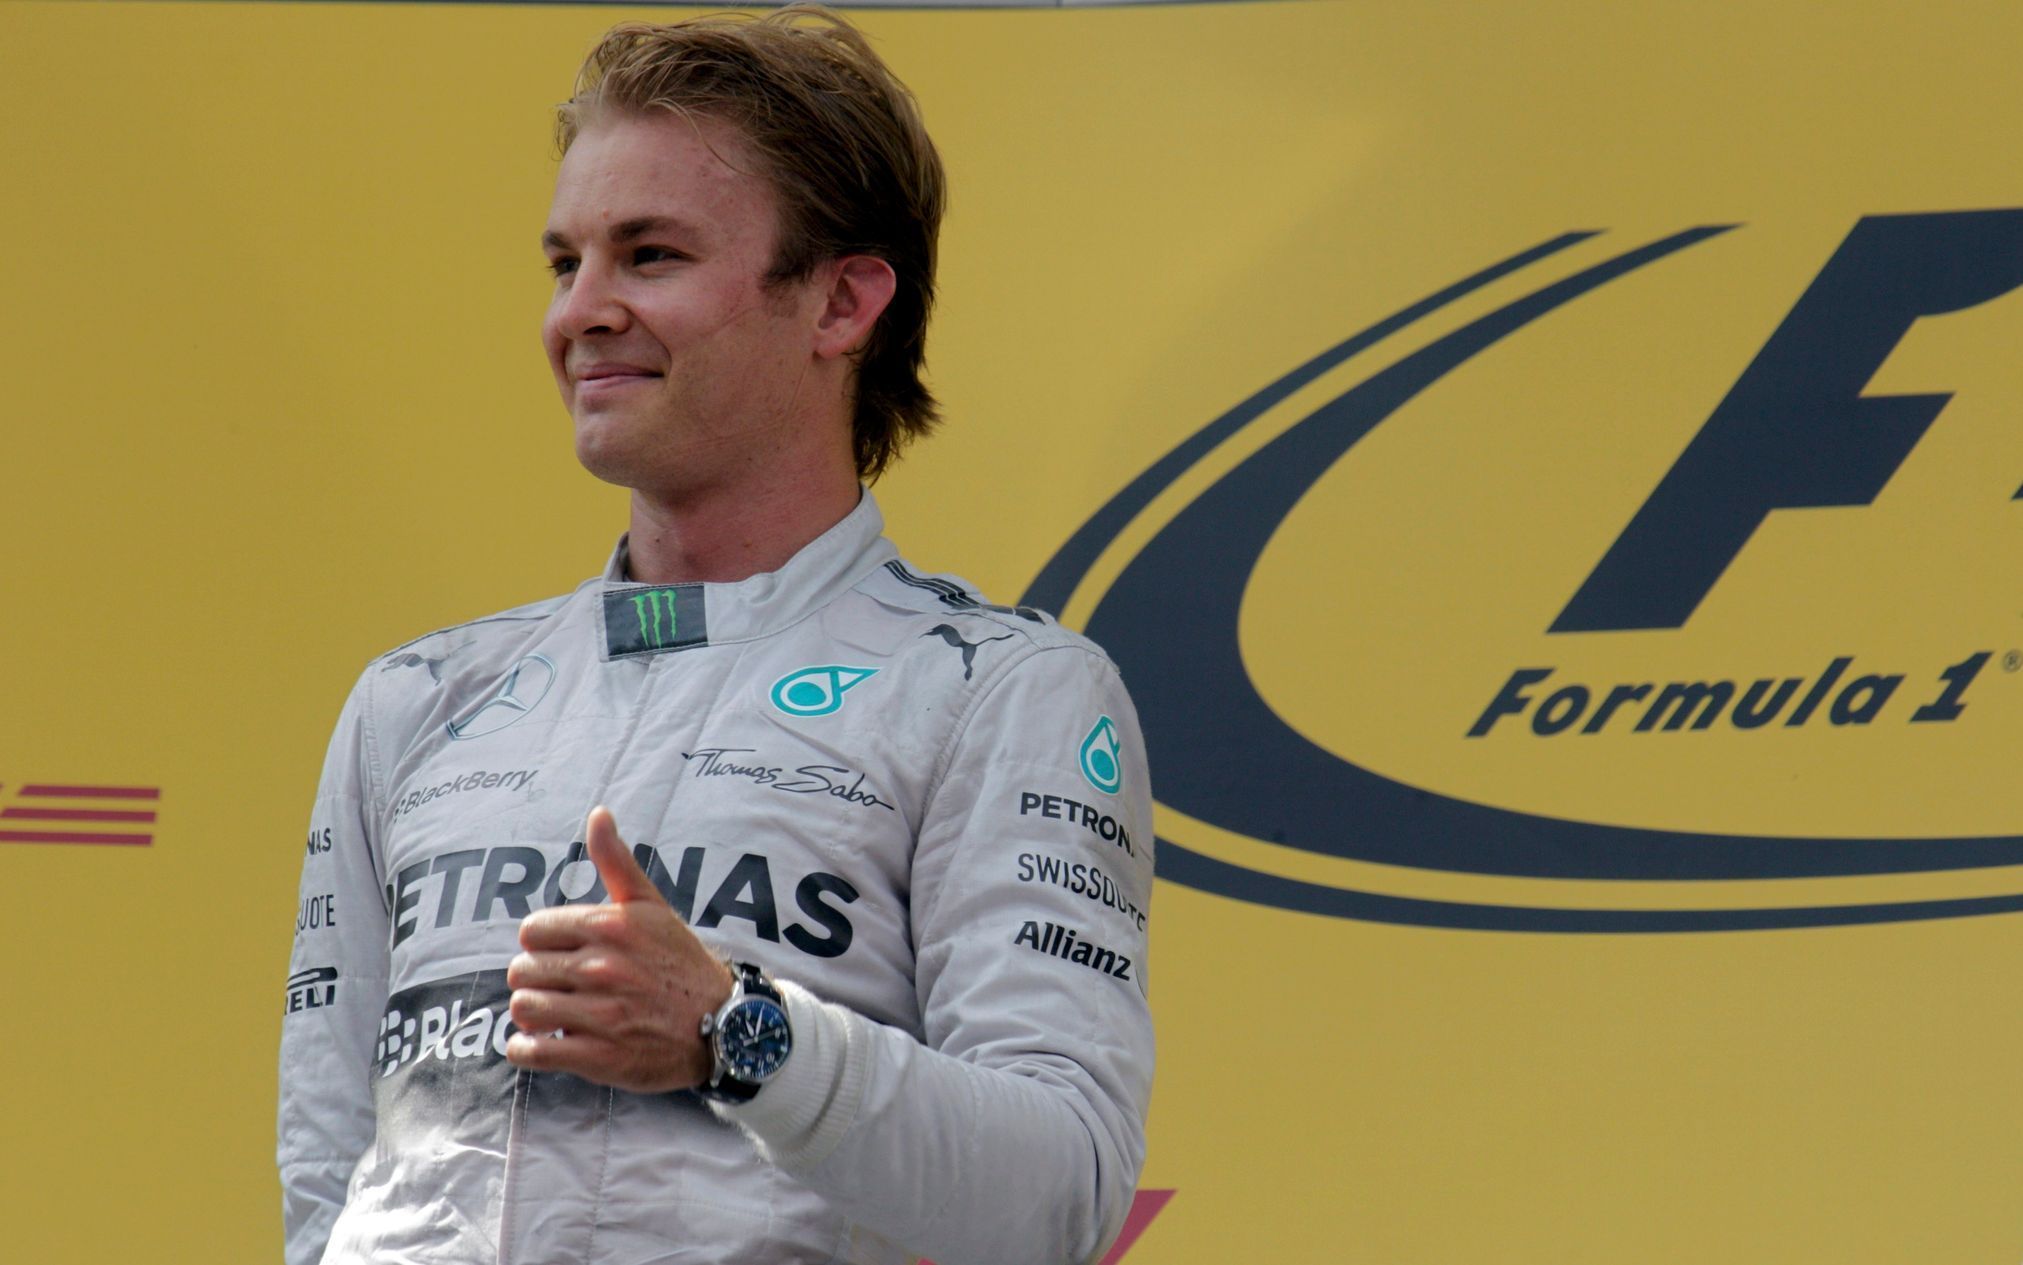 VC Rakouska F1: Nico Rosberg, Mercedes